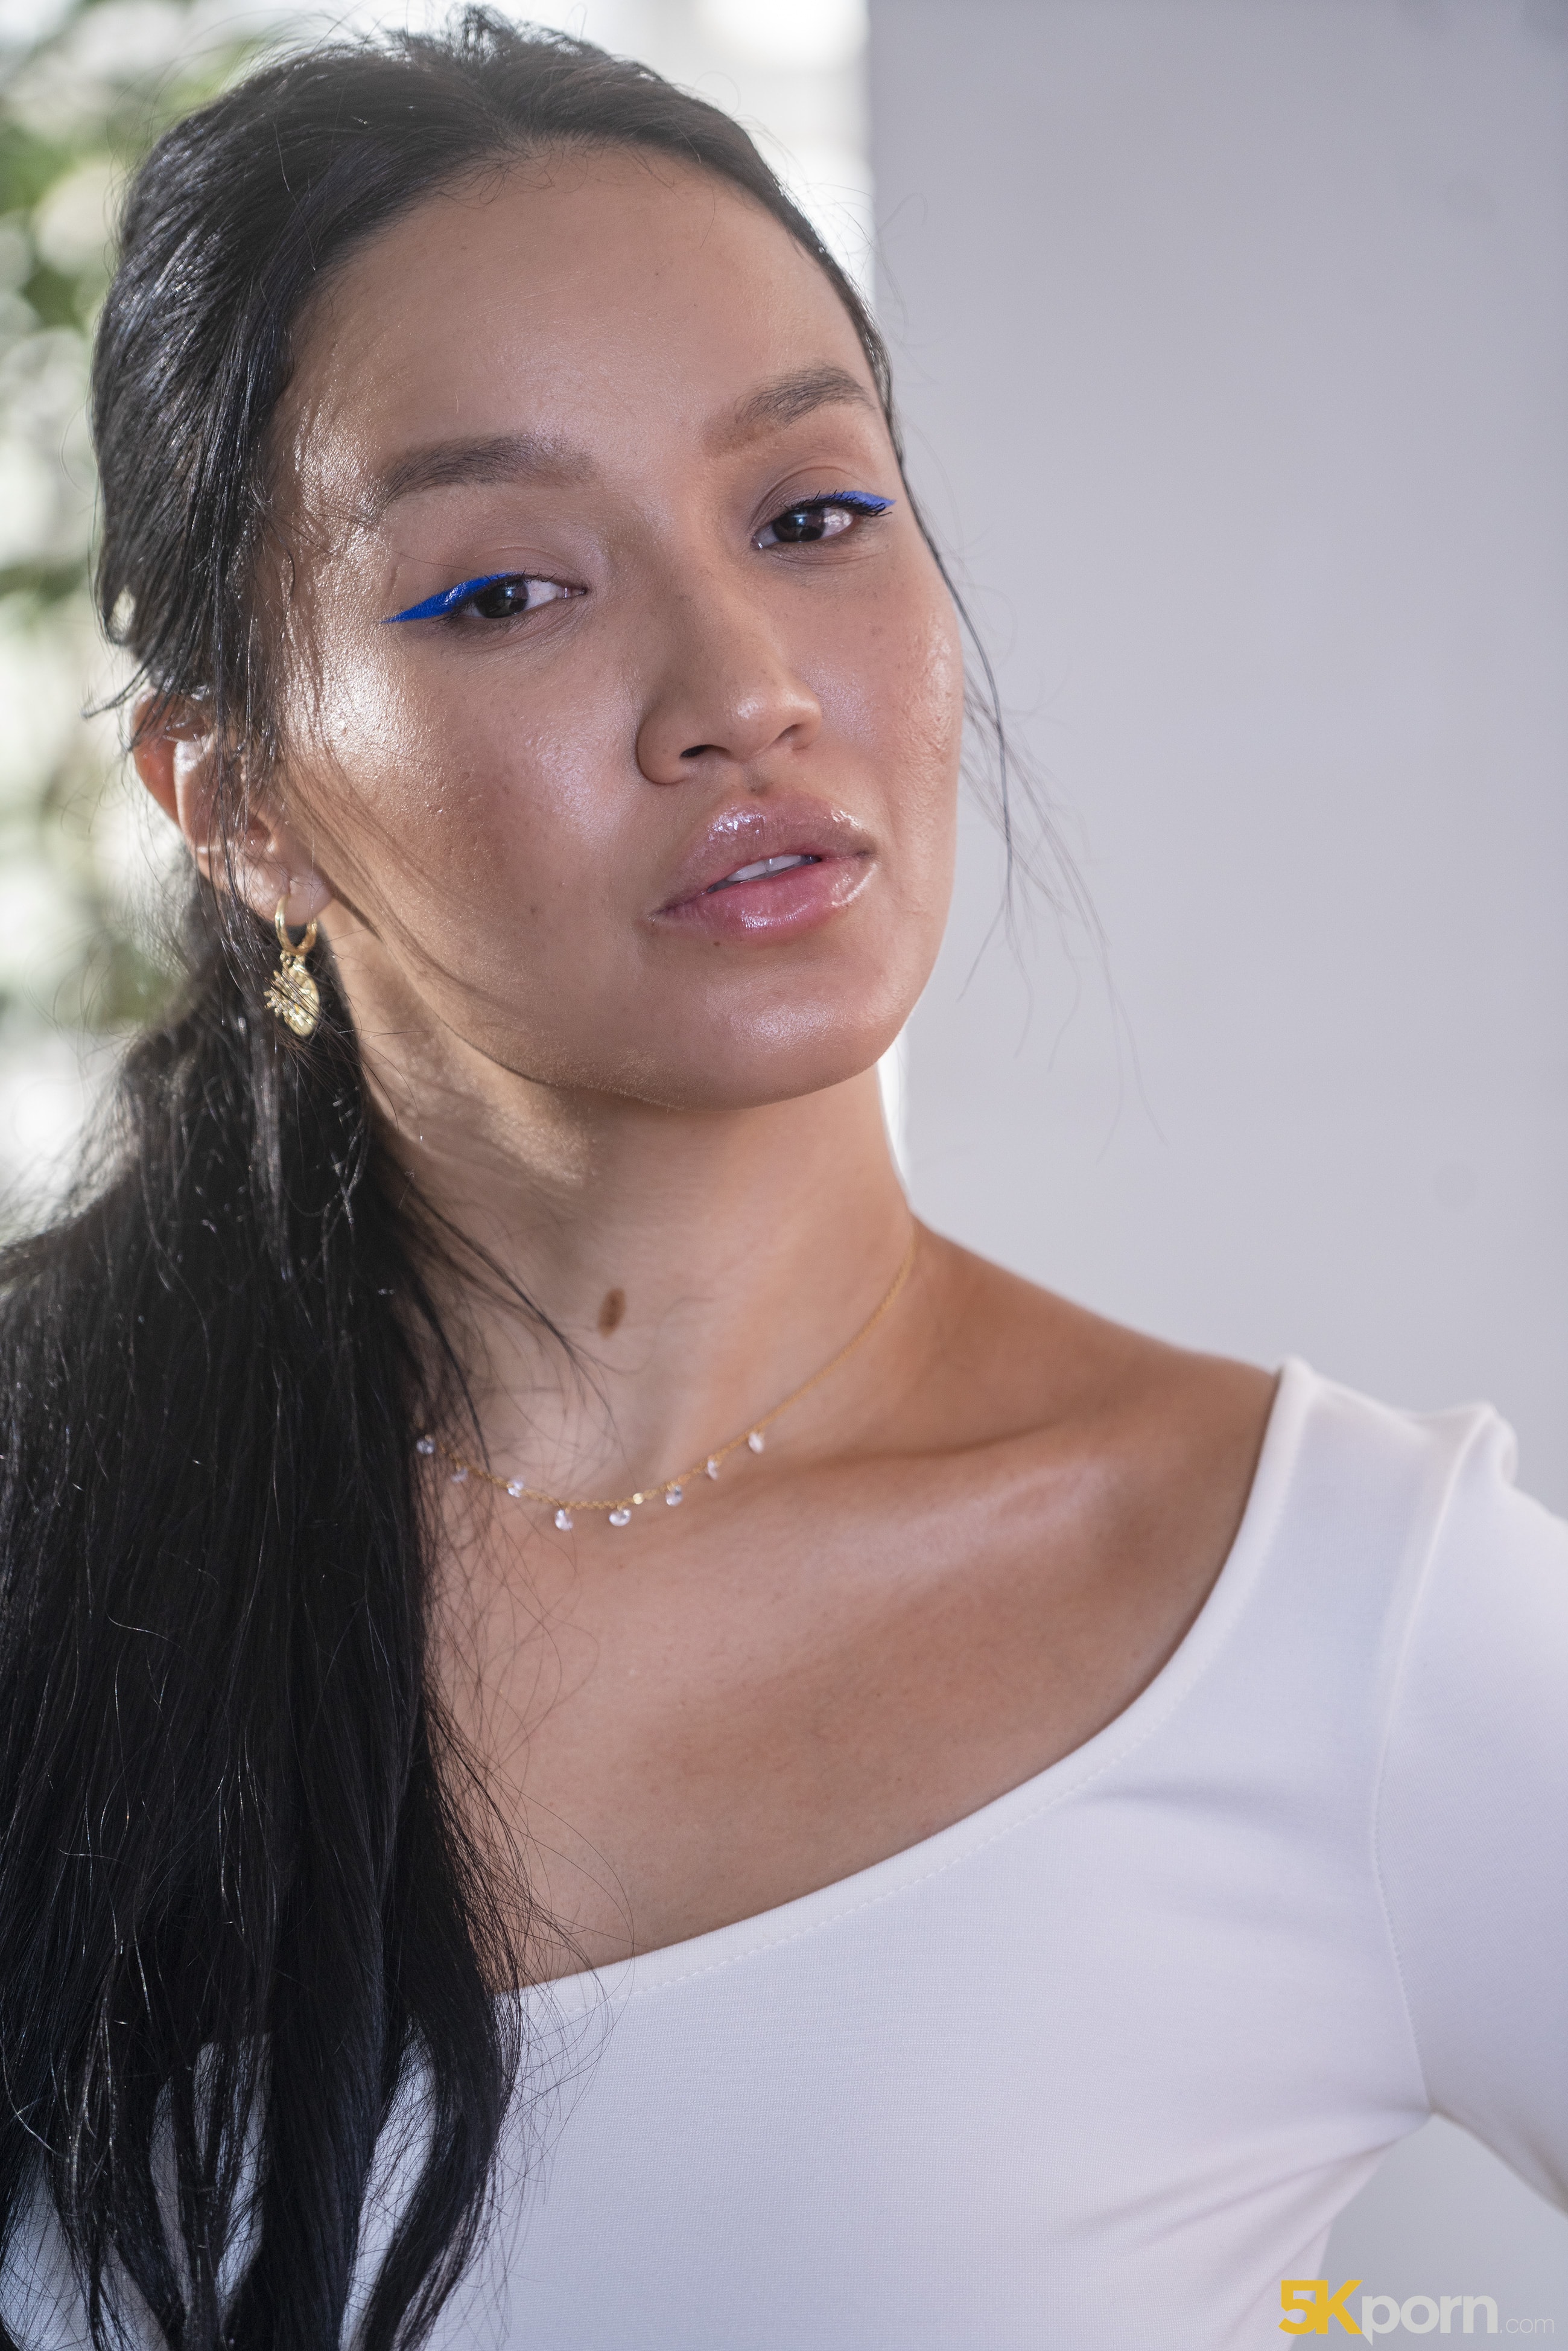 5K Porn 'White Hot' starring Asia Vargas (Photo 1)